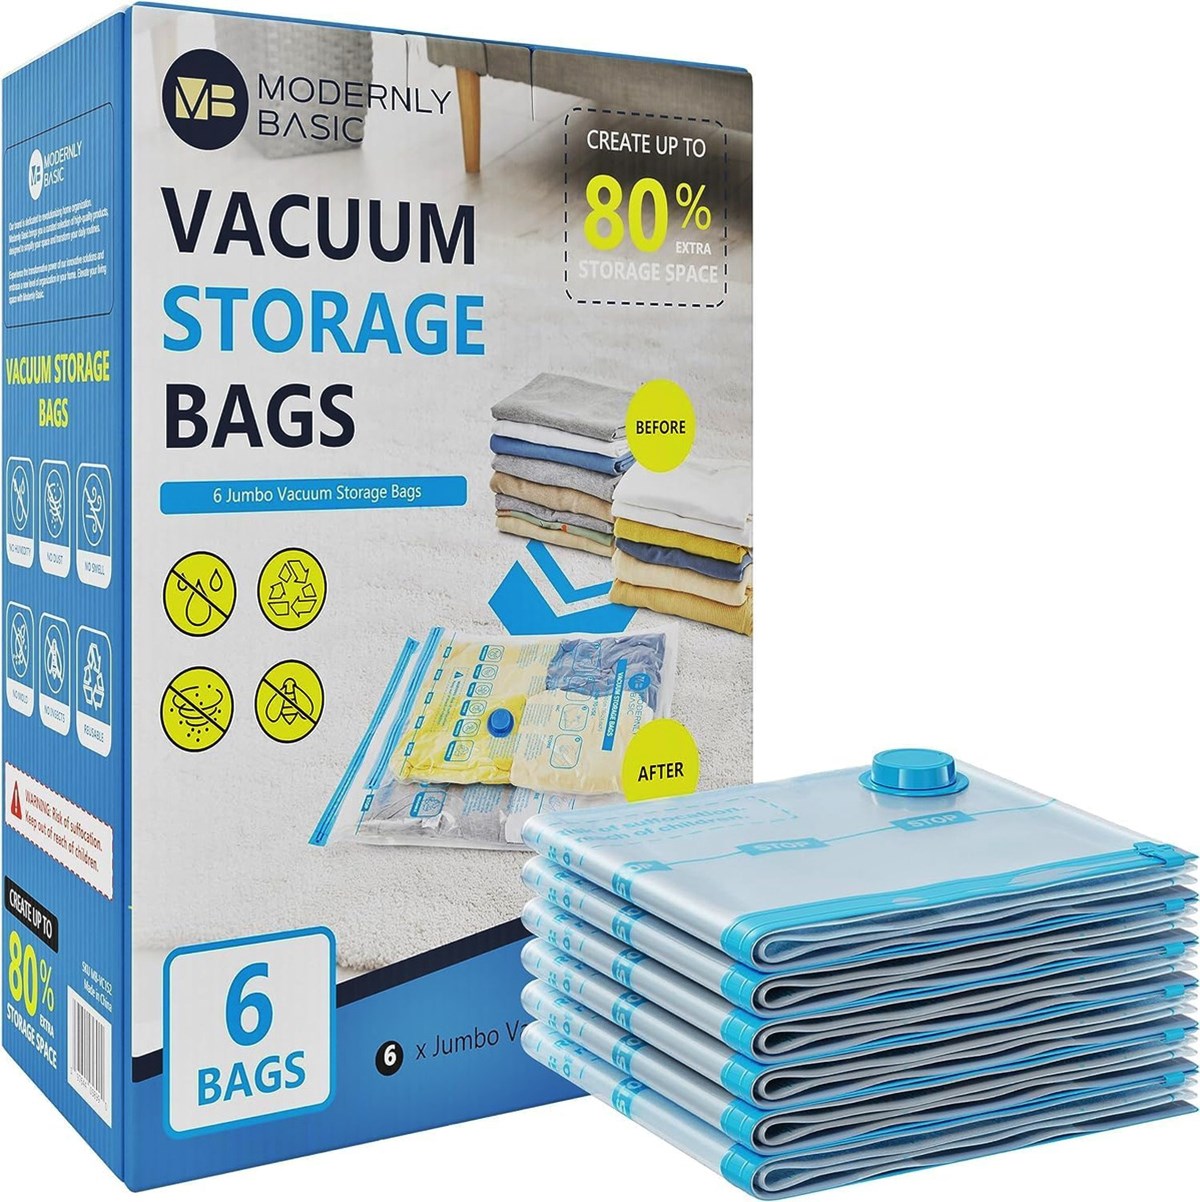 Hefty Shrink-Pak - 3 Jumbo Vacuum Storage Bags for under Bed